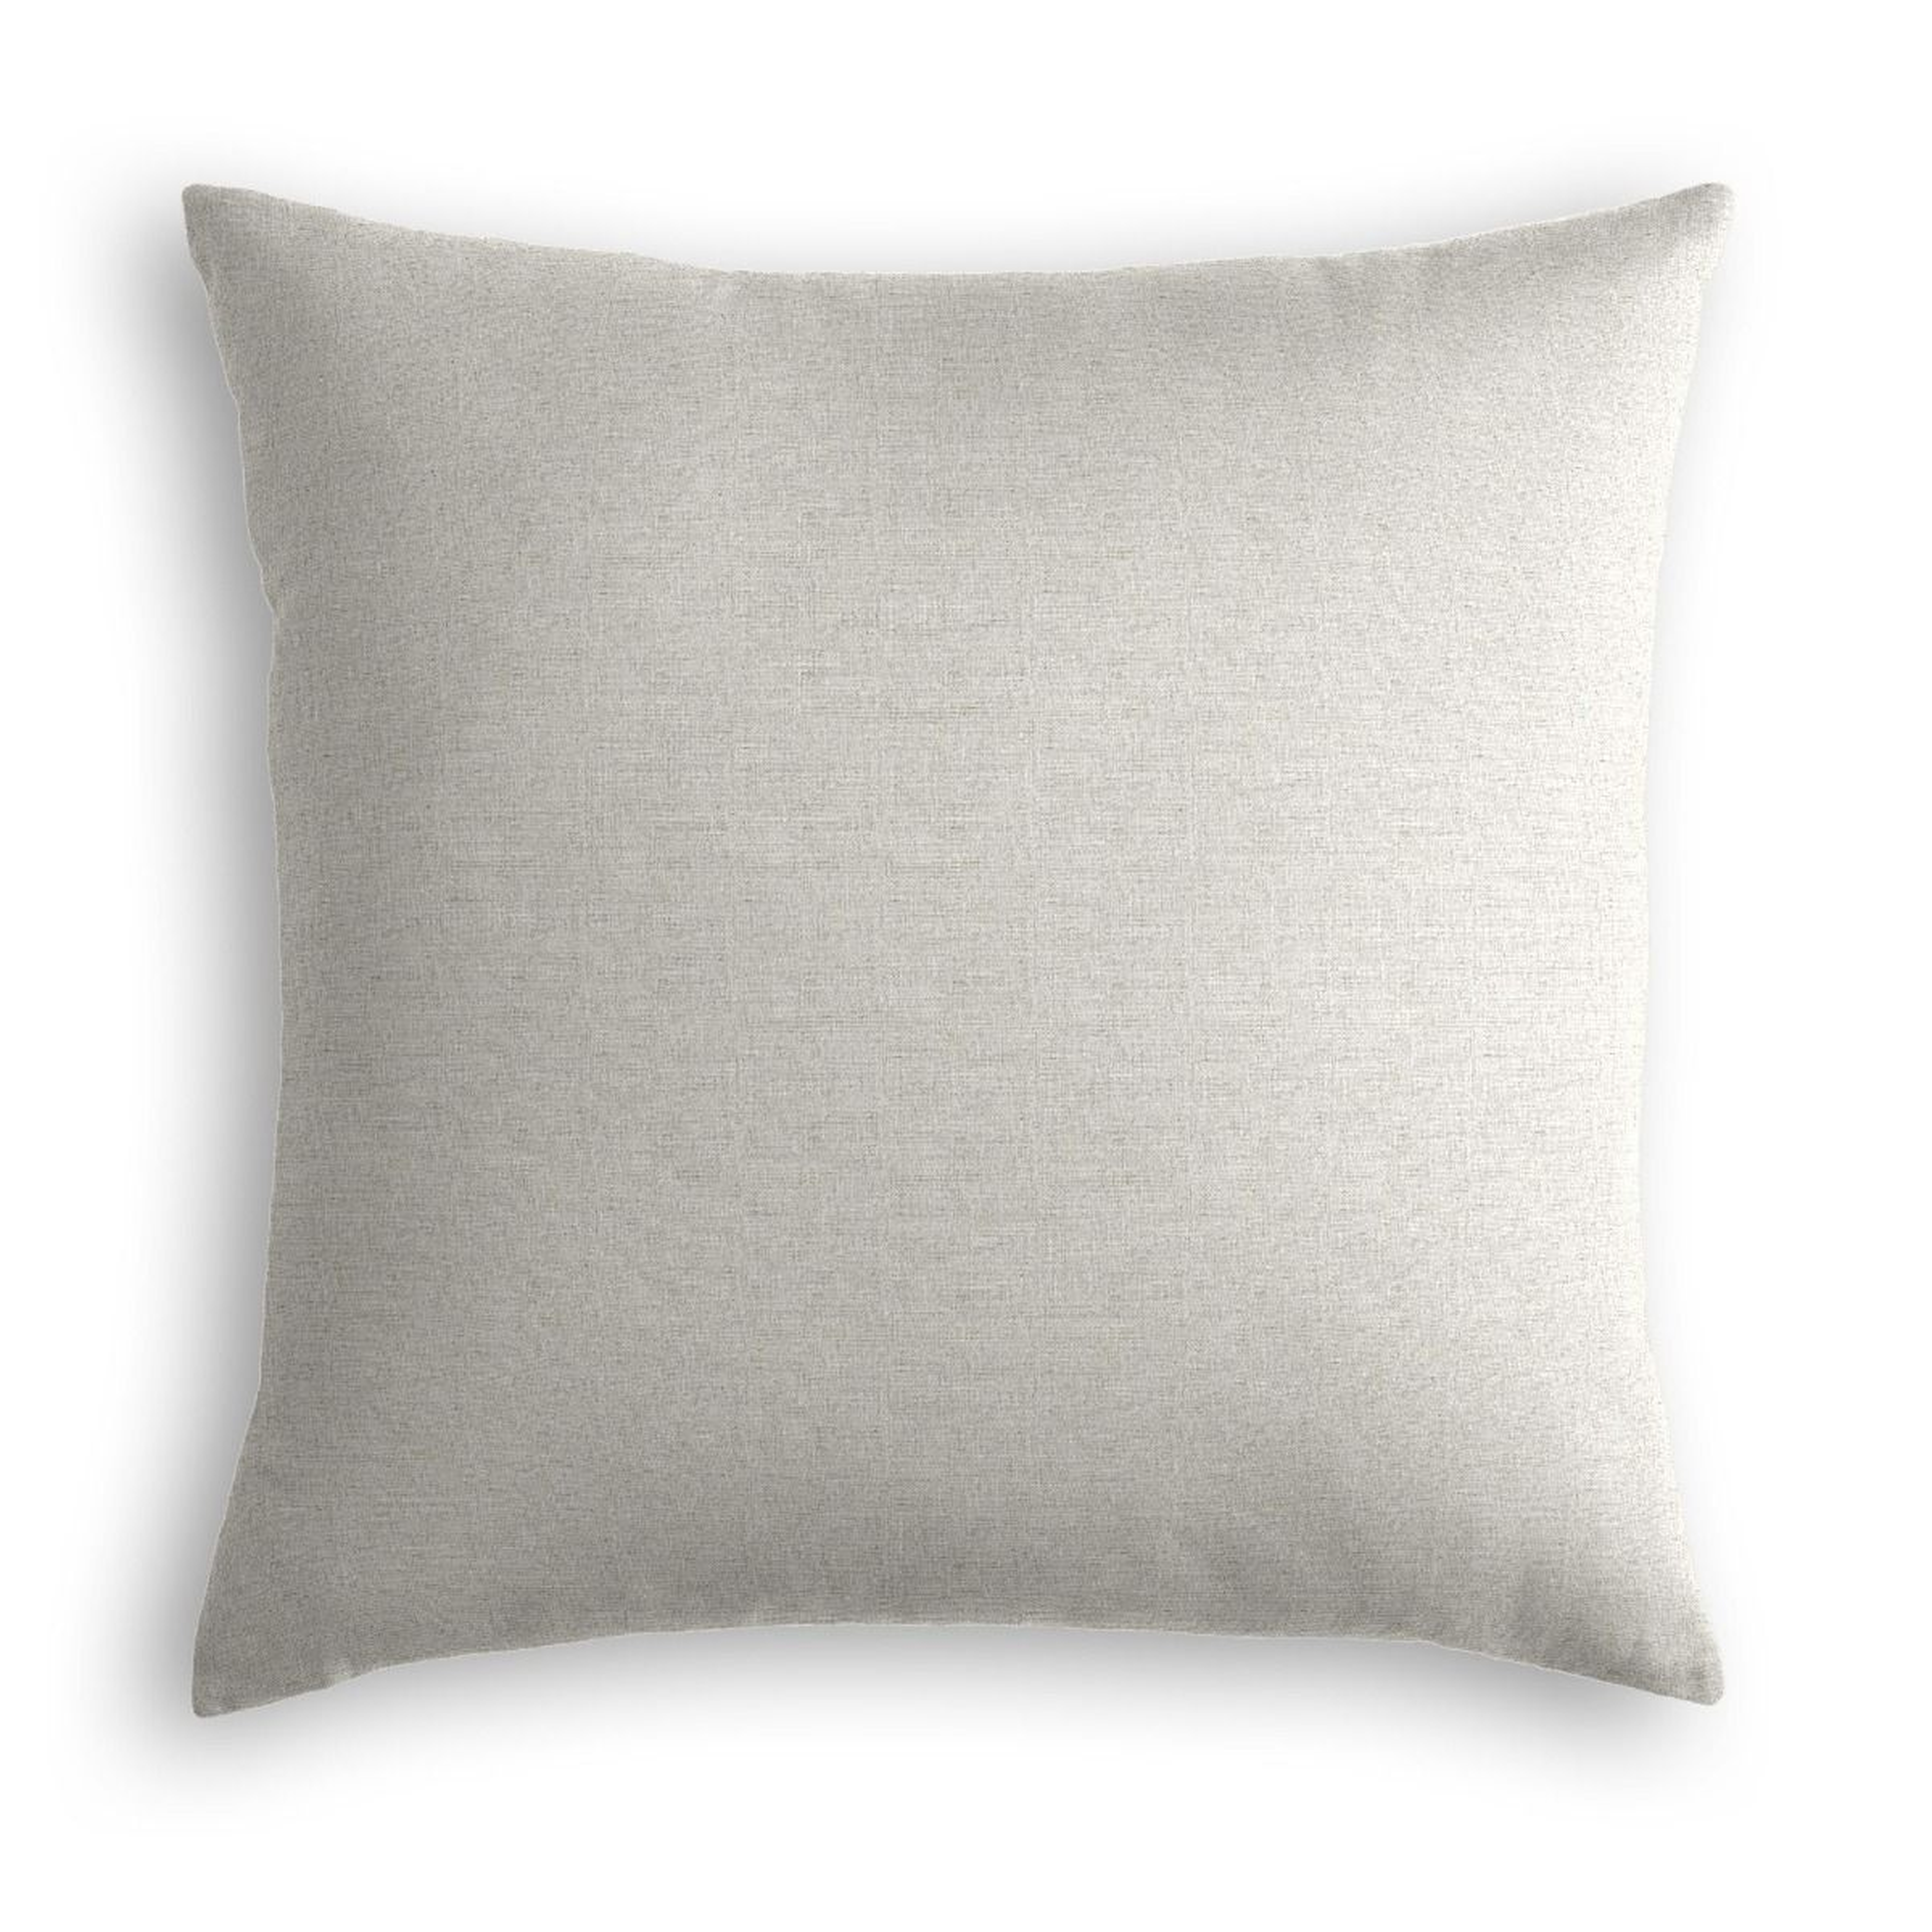 Classic Linen Pillow, Sandy Tan, 20" x 20" - Havenly Essentials